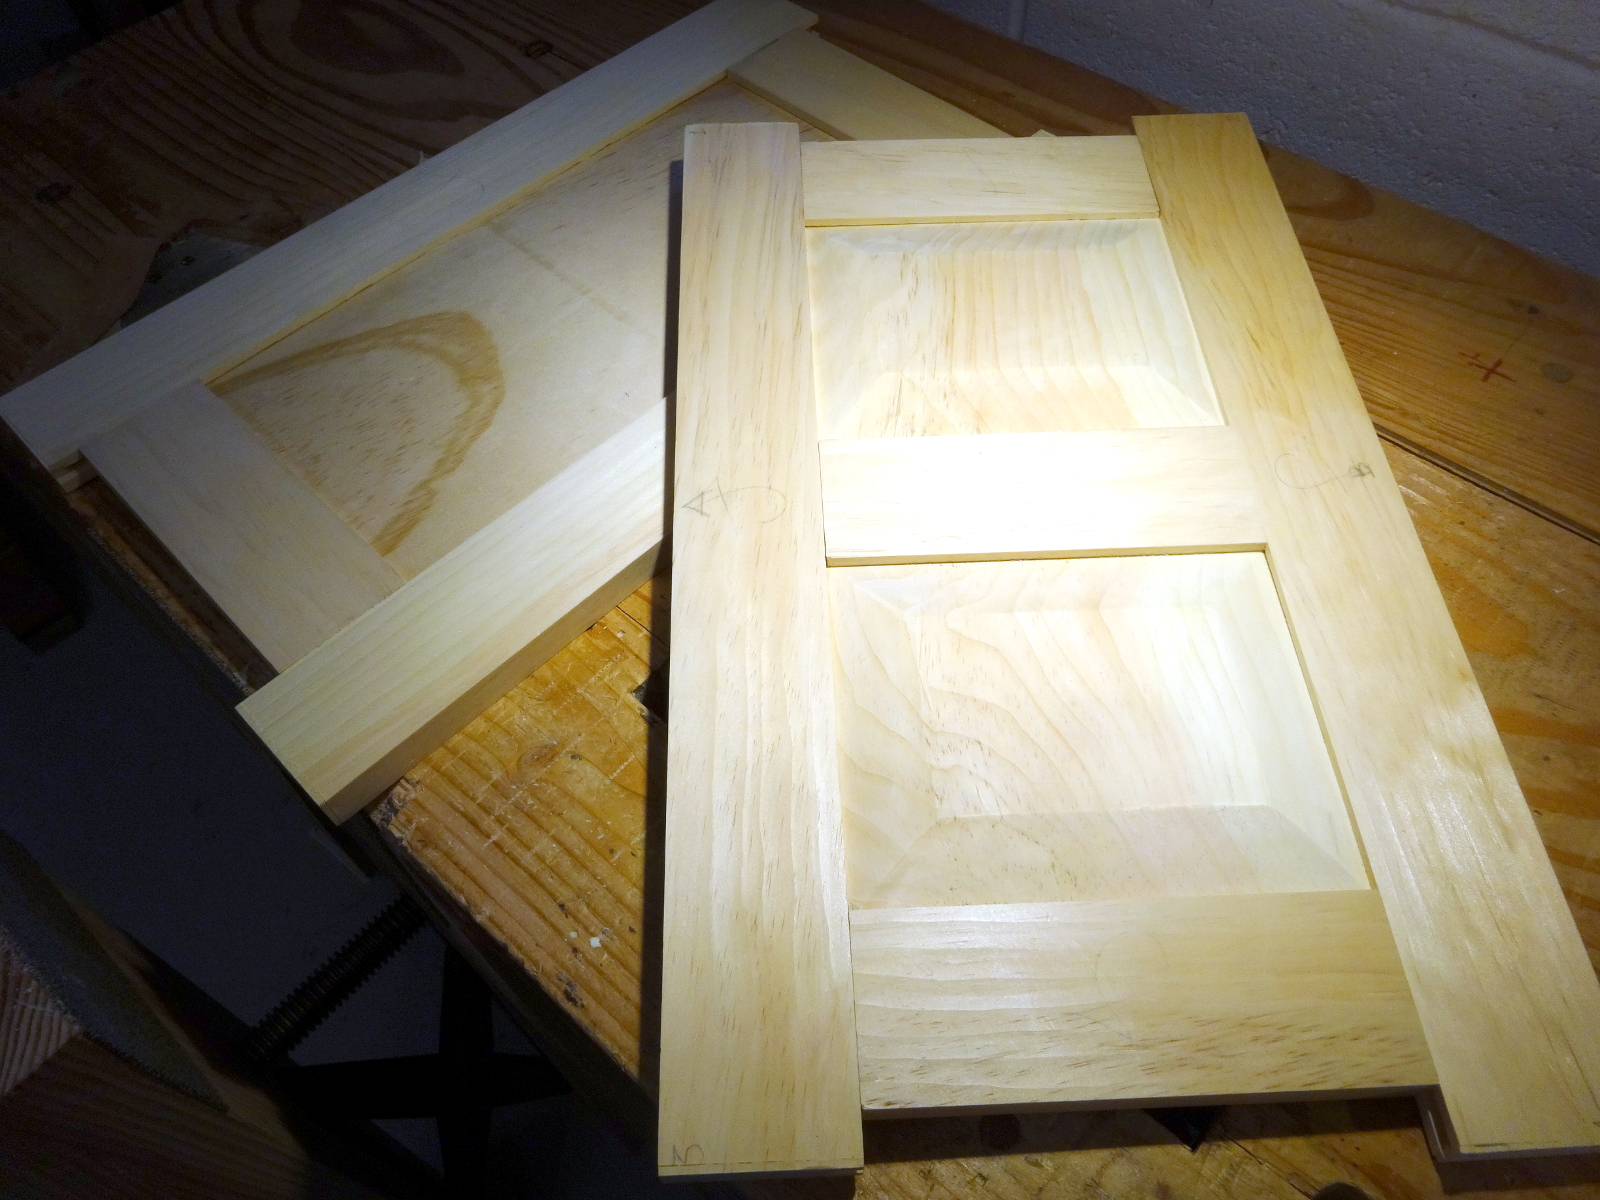 lathe tool chest – panels